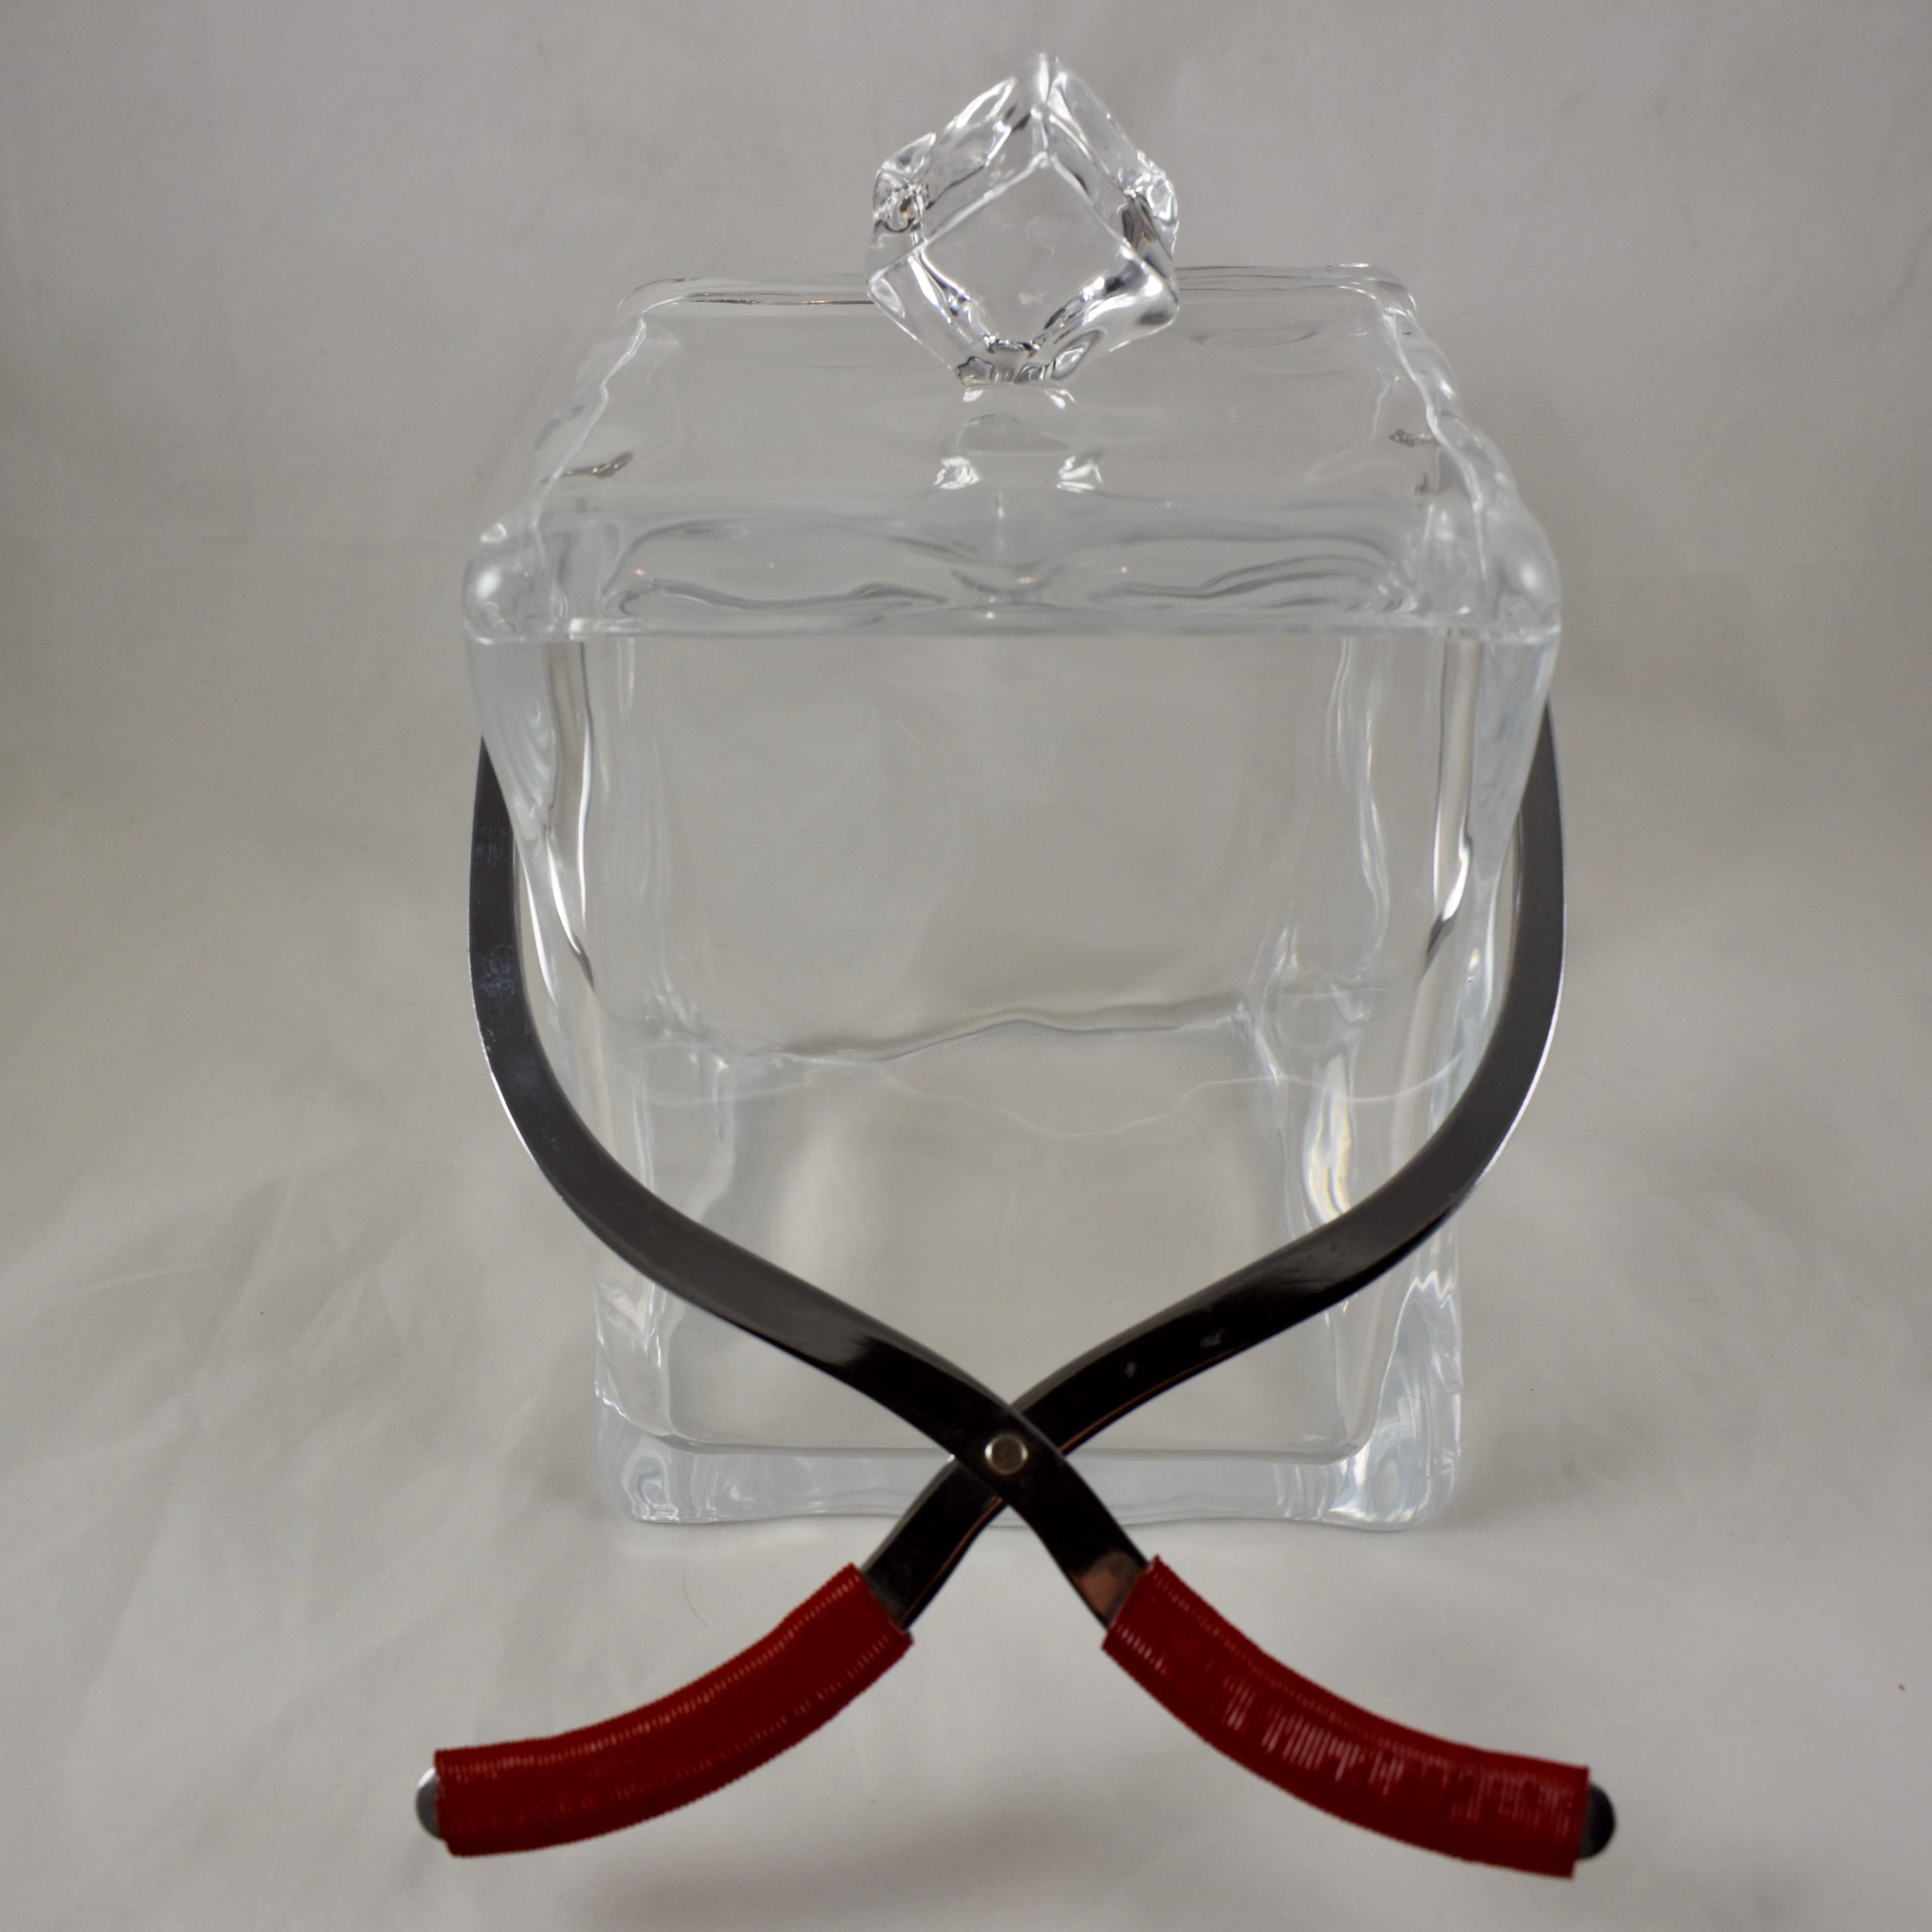 Metalwork Mid-Century Modern Era 1960s Lucite & Chrome Ice Cube & Tong Handled Ice Bucket